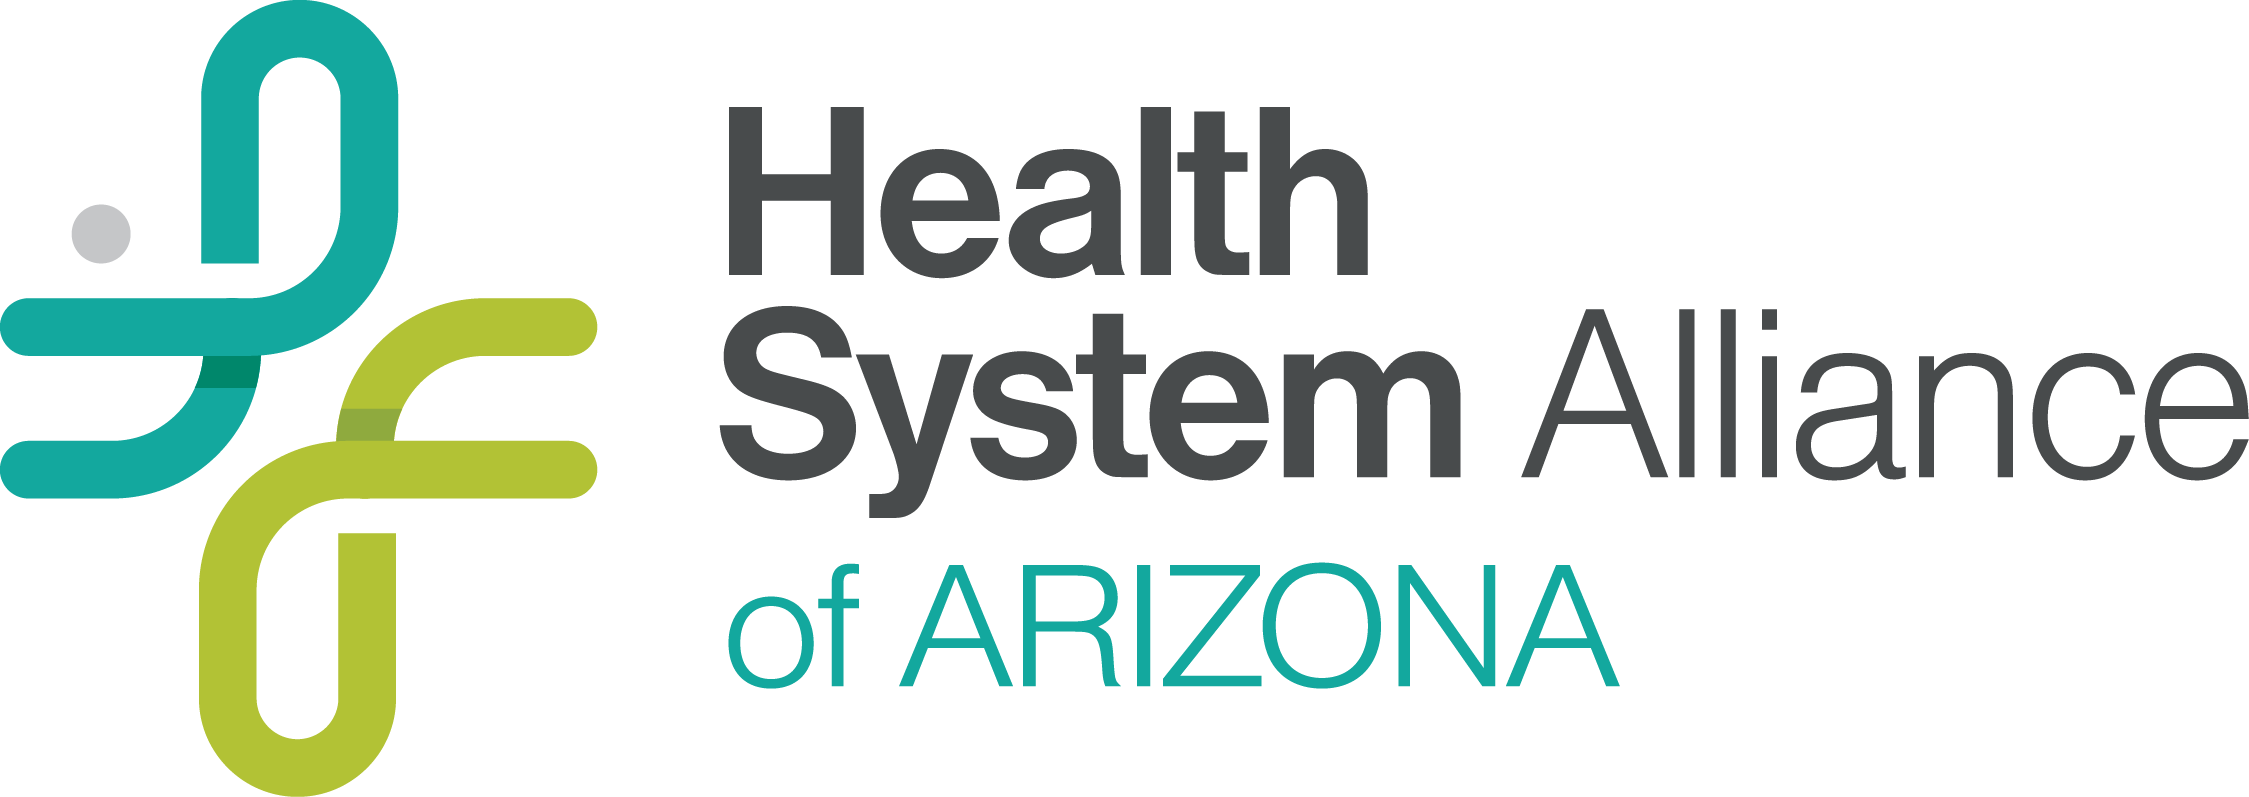 Health System Alliance of Arizona